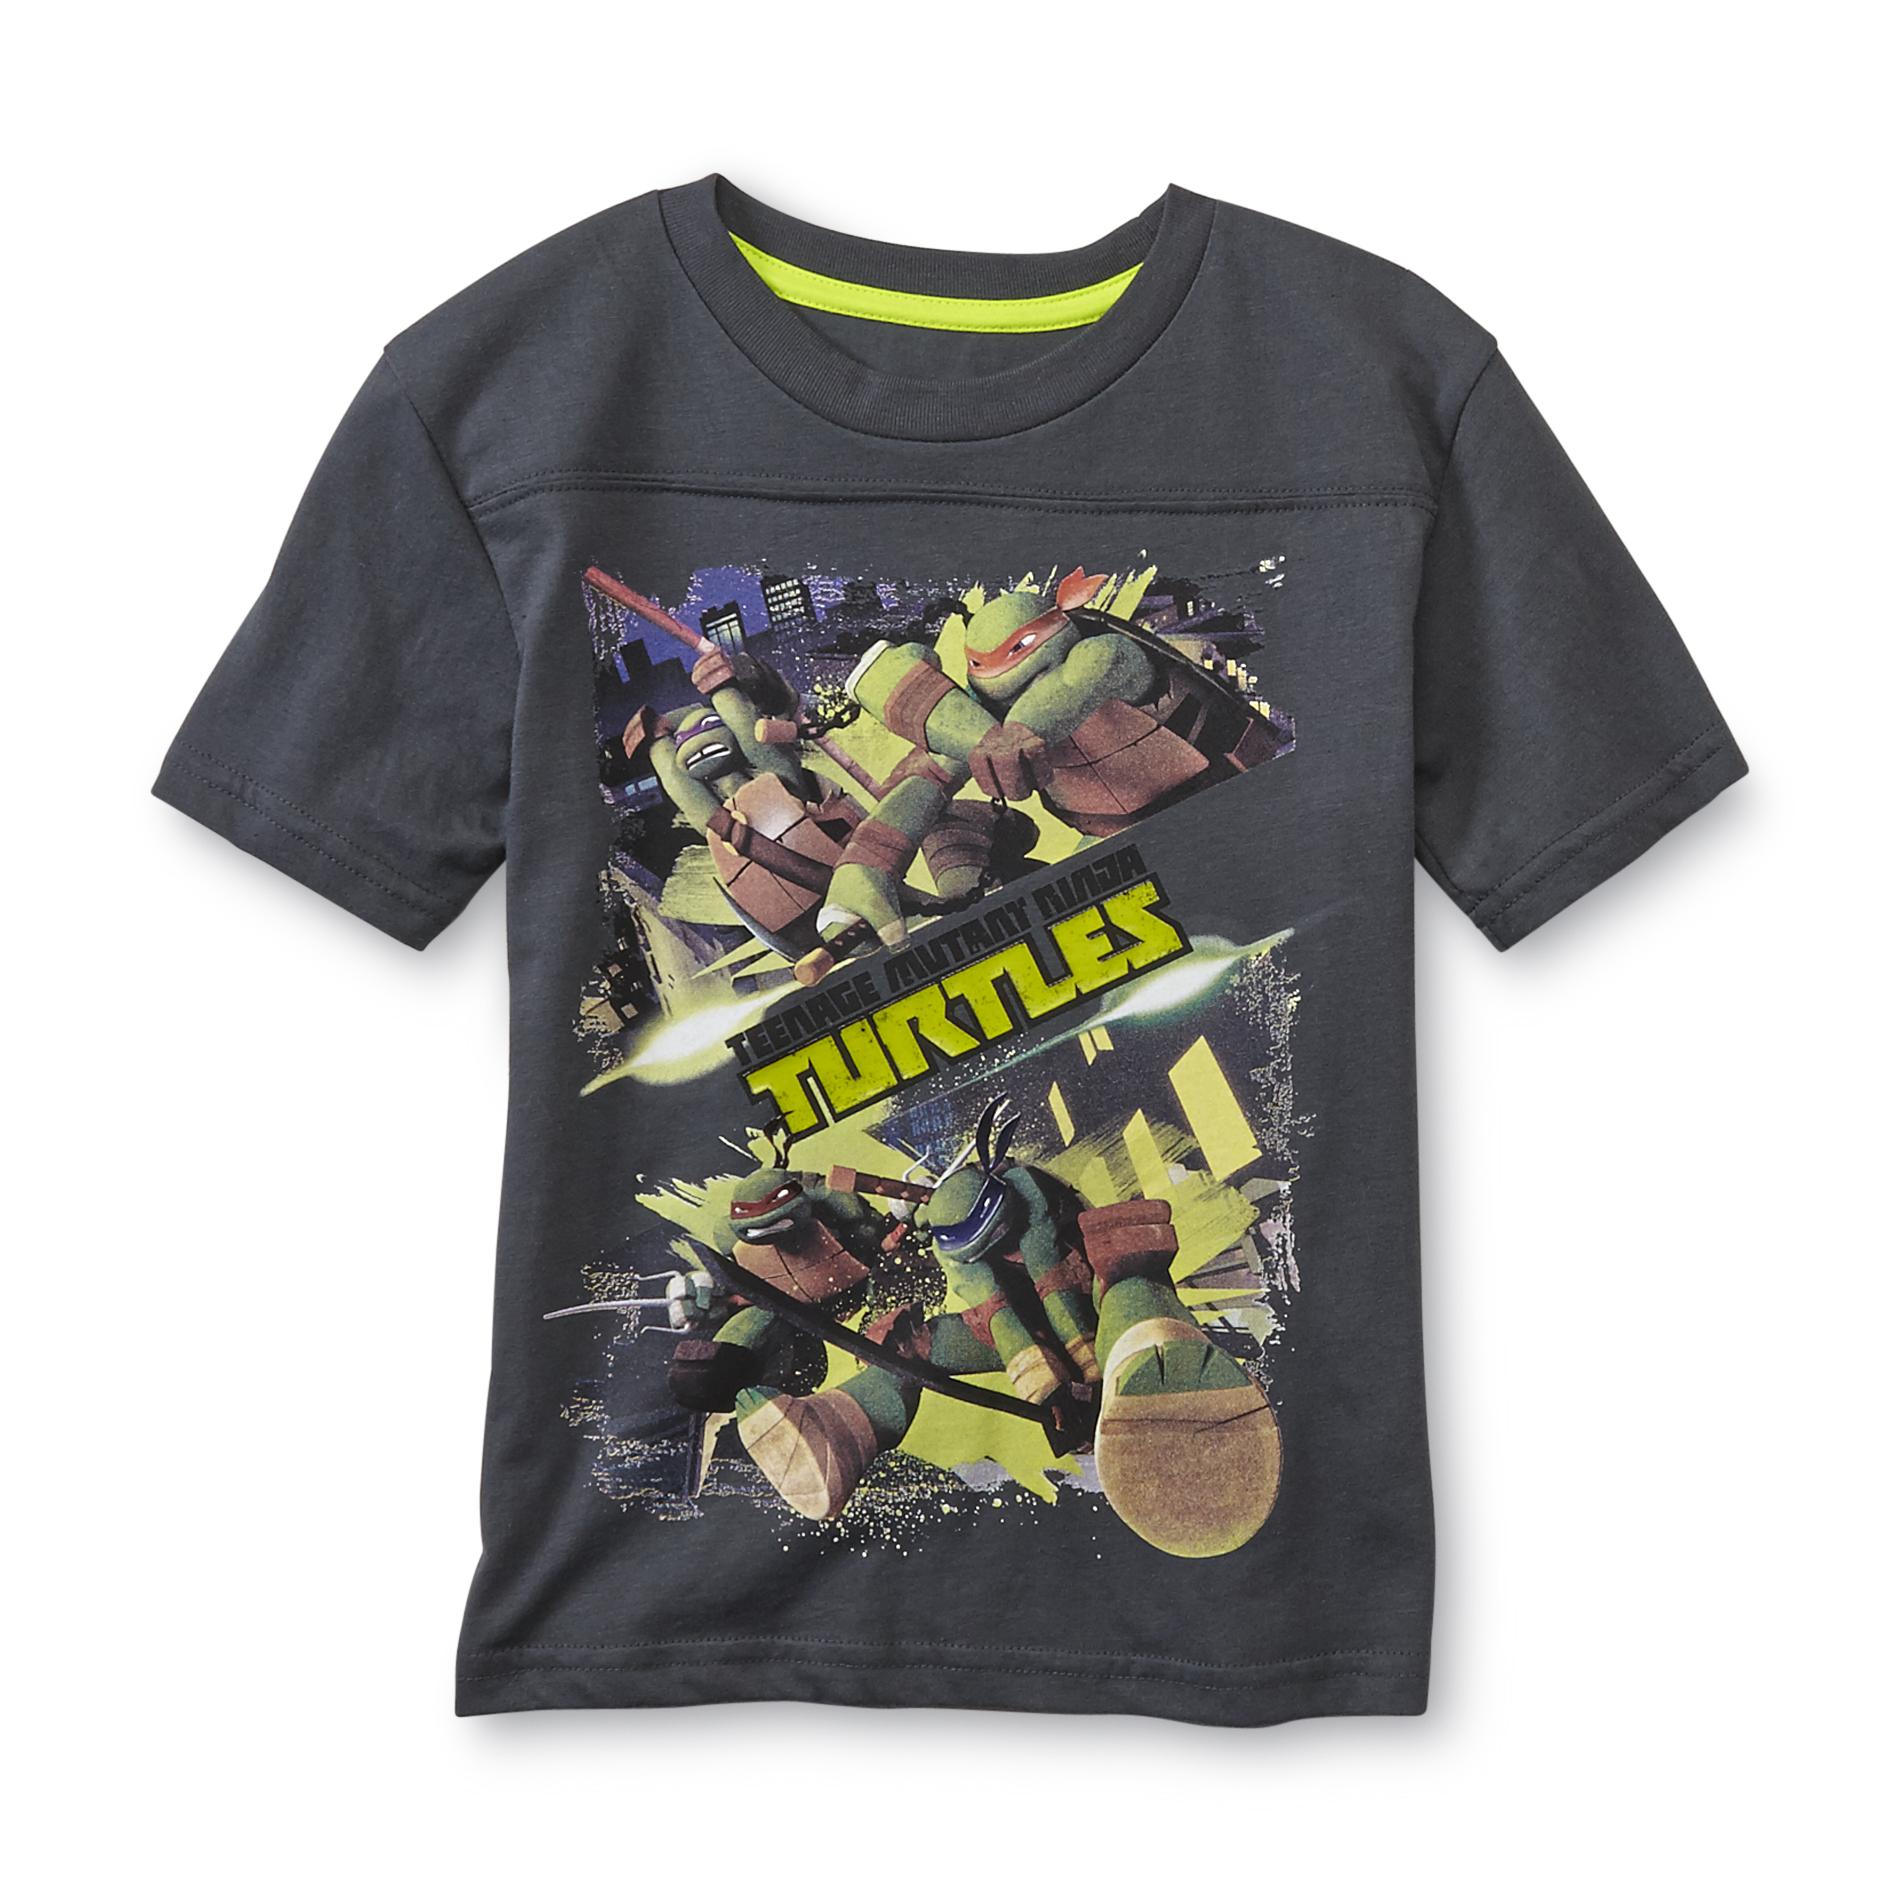 Nickelodeon Teenage Mutant Ninja Turtles Boy's T-Shirt